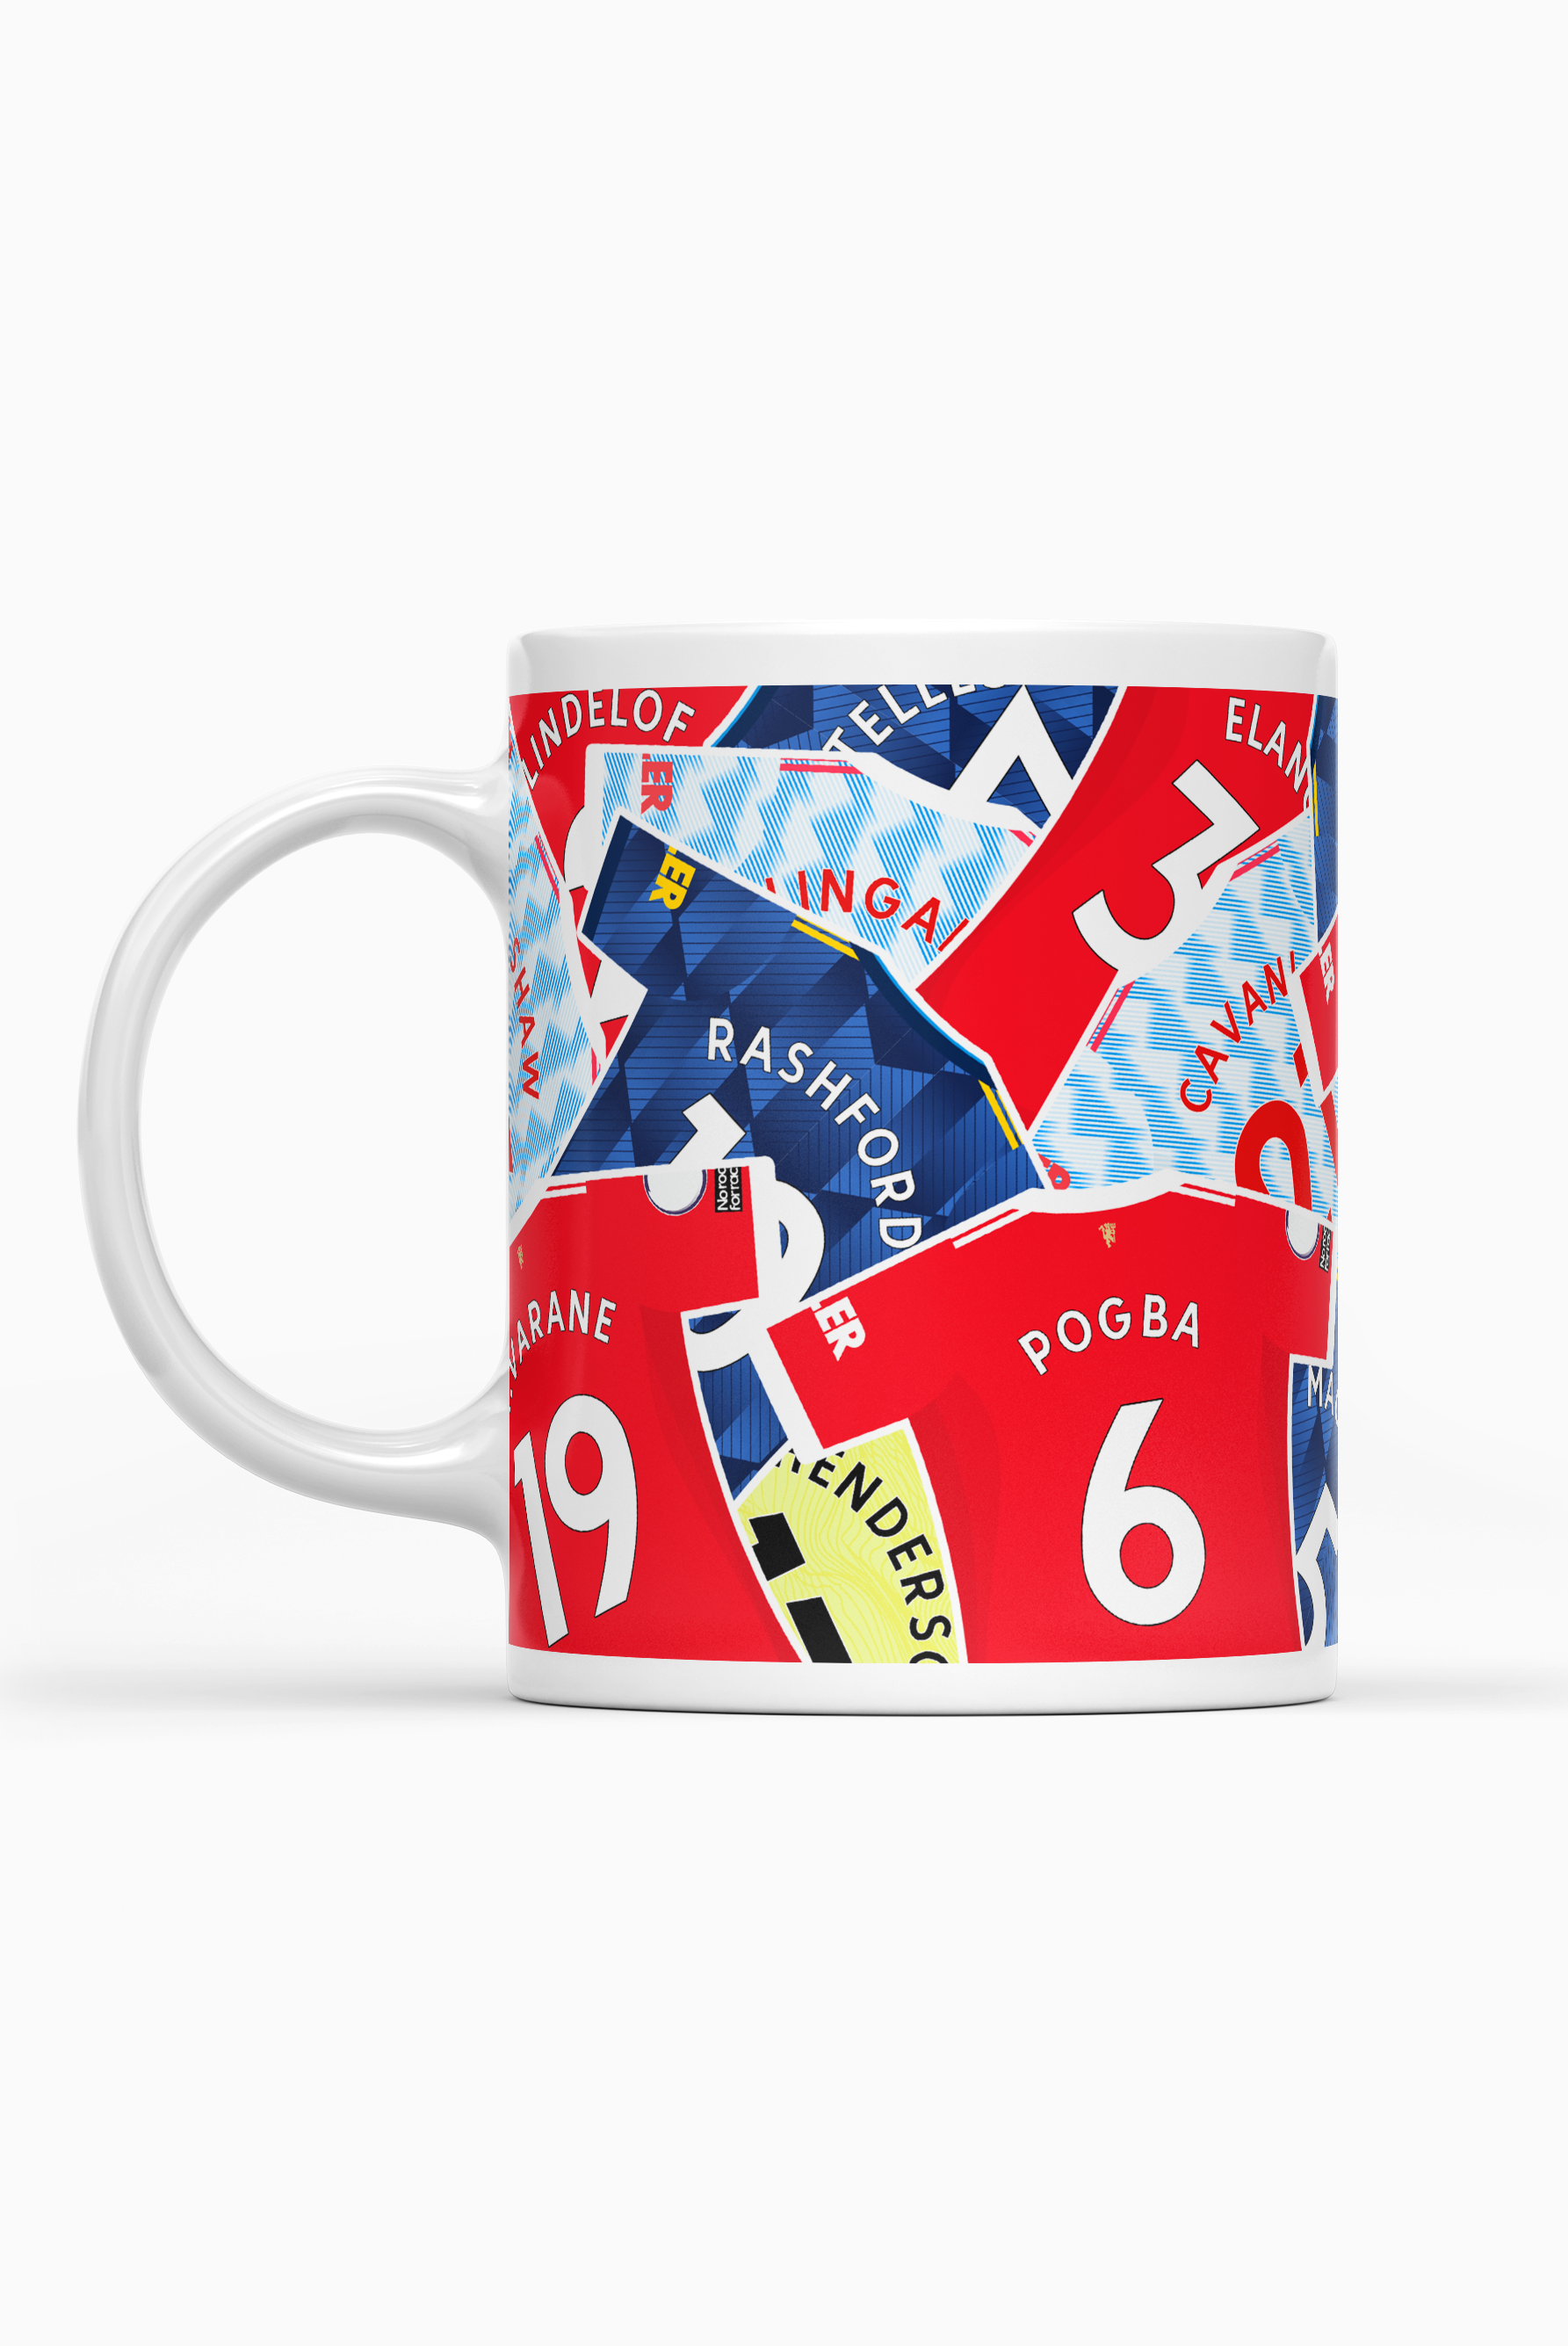 Man United / 2021-22 Squad Mug